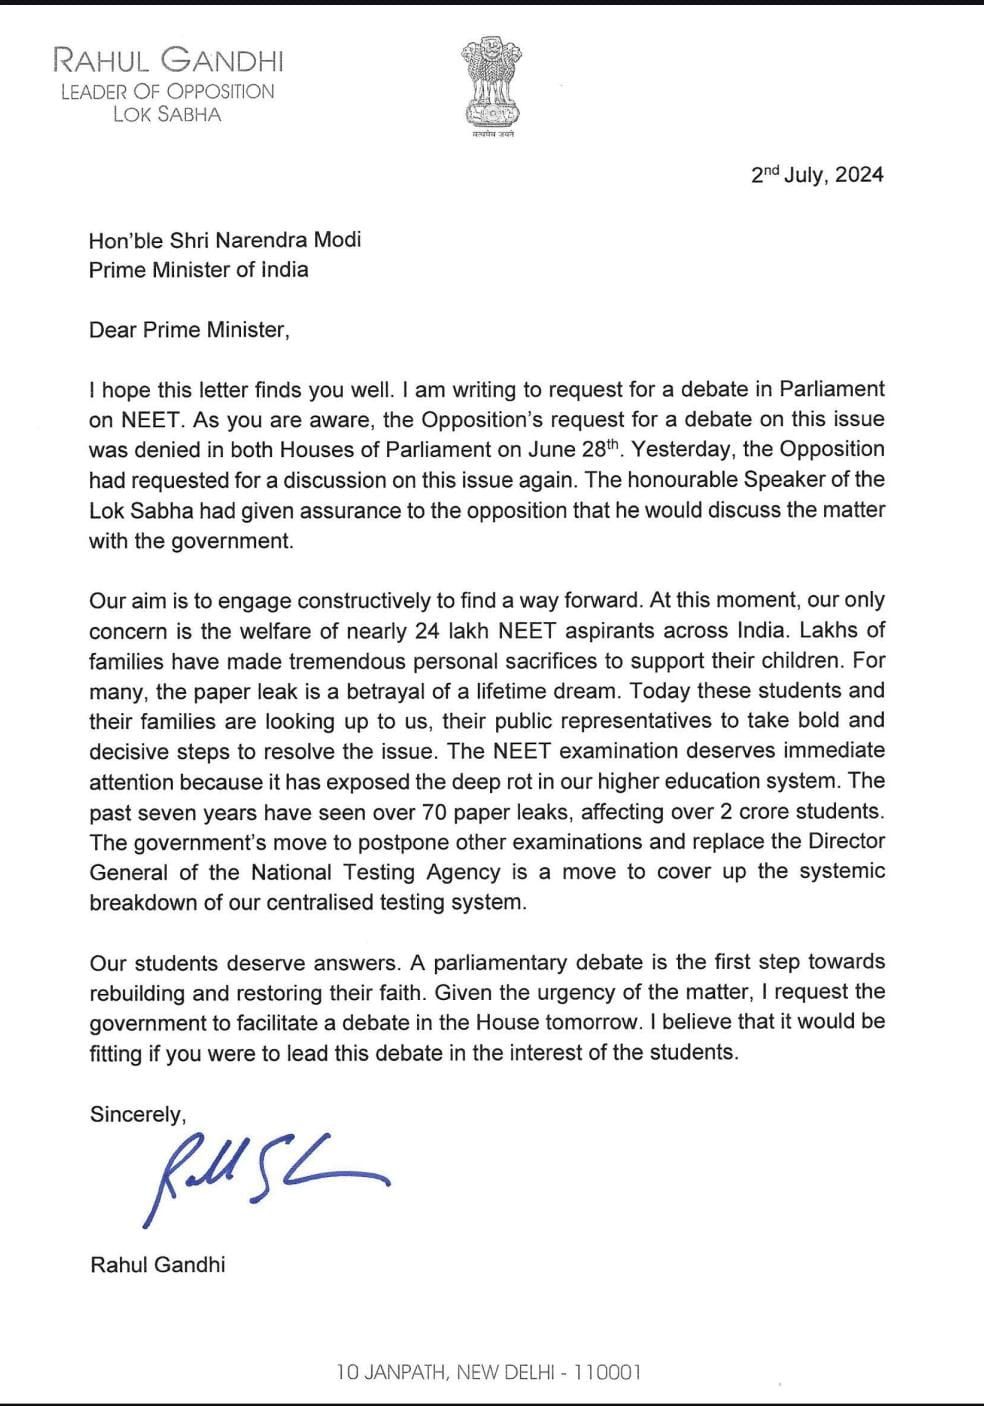 Rahul Gandhi's letter to PM Modi